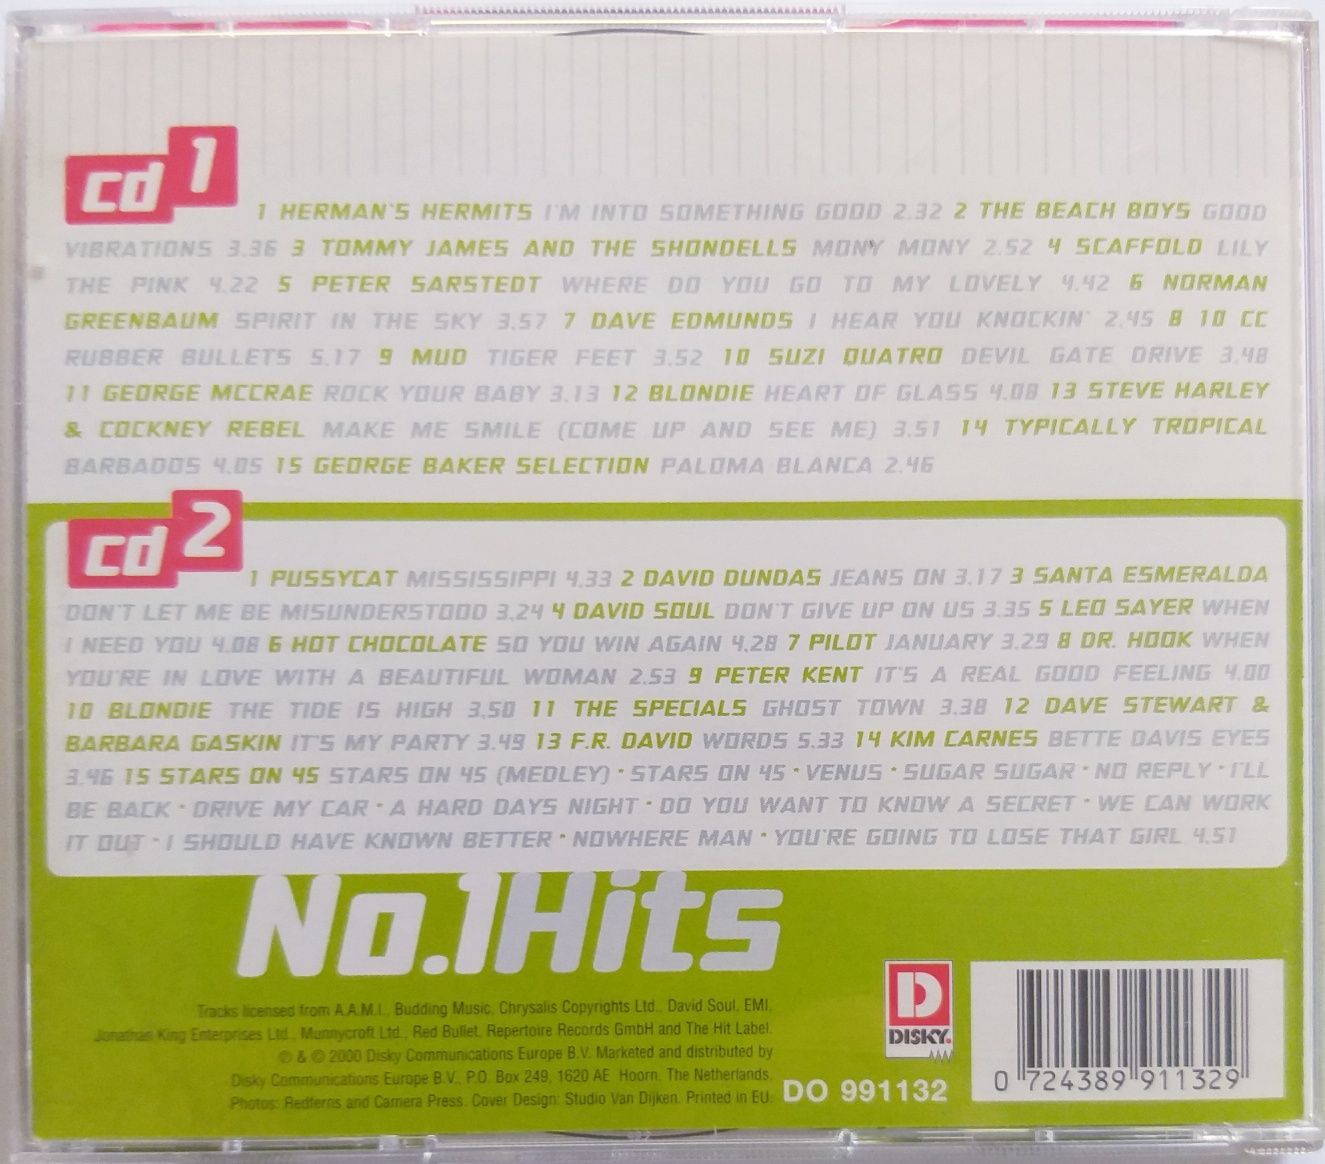 No.1 Hits 2CD 2000r Blondie Hot Chocolate Suzi Quatro The Beatch Boys